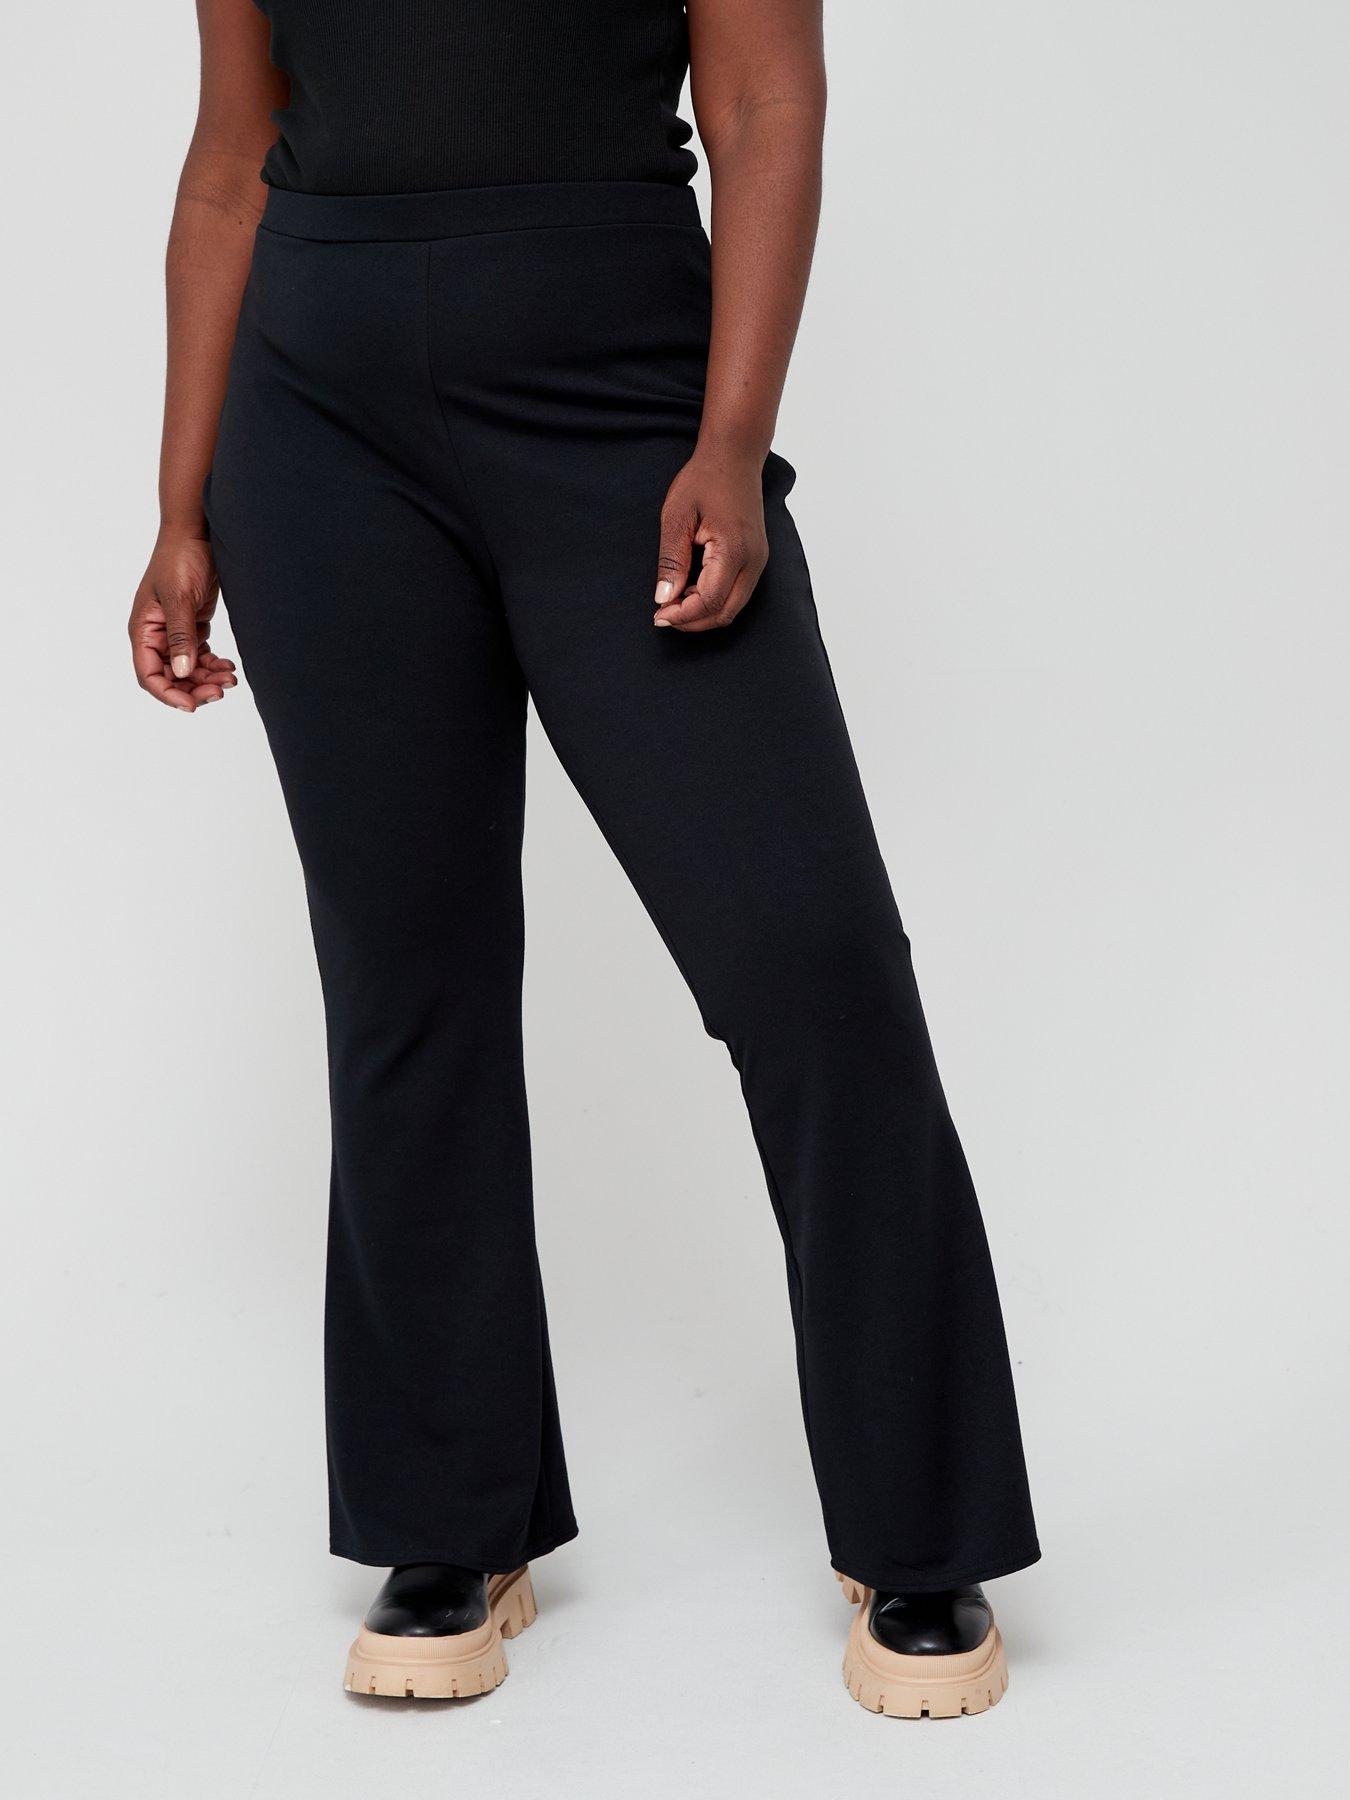 Dagmar Jersey Pants black-light grey allover print elegant Fashion Trousers Jersey Pants 